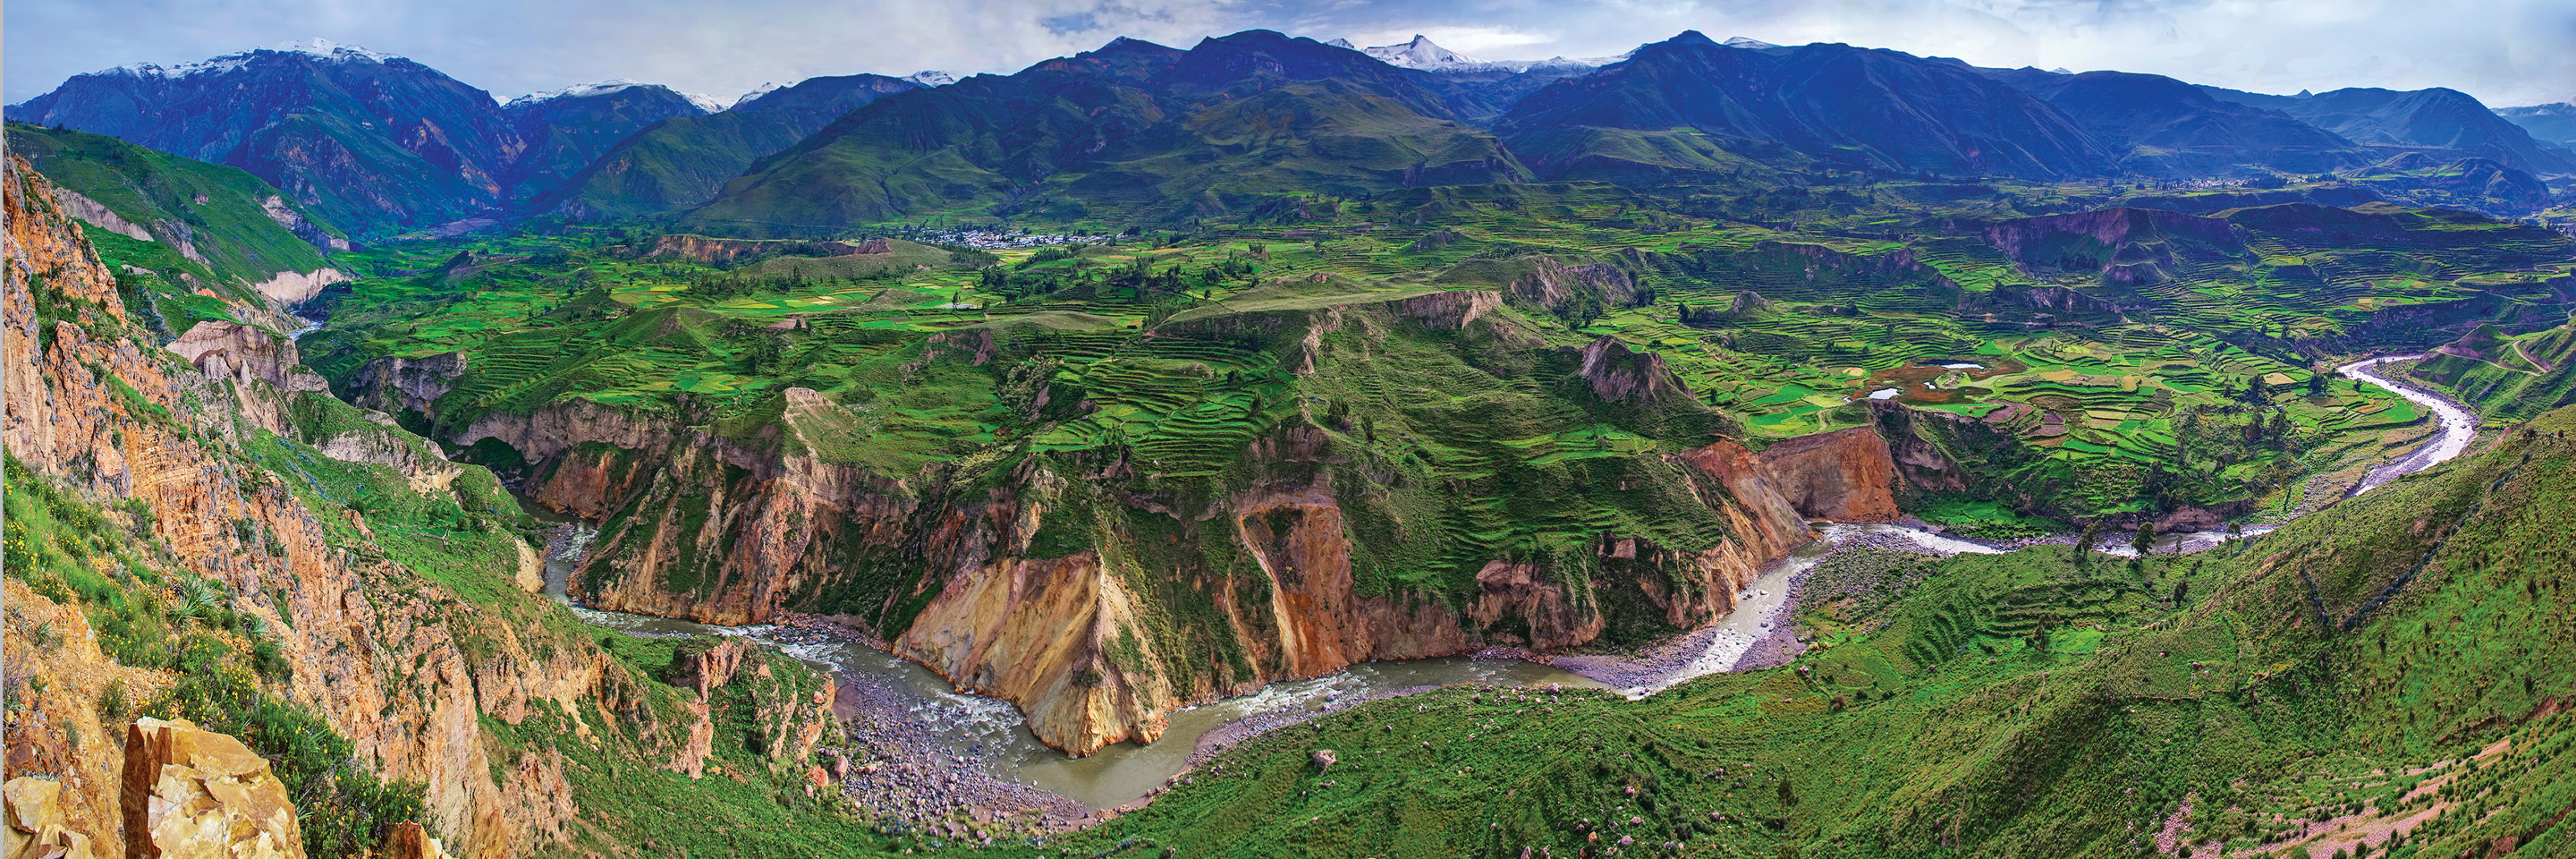 Peru Splendors with Peru's Amazon, Arequipa & Colca Canyon